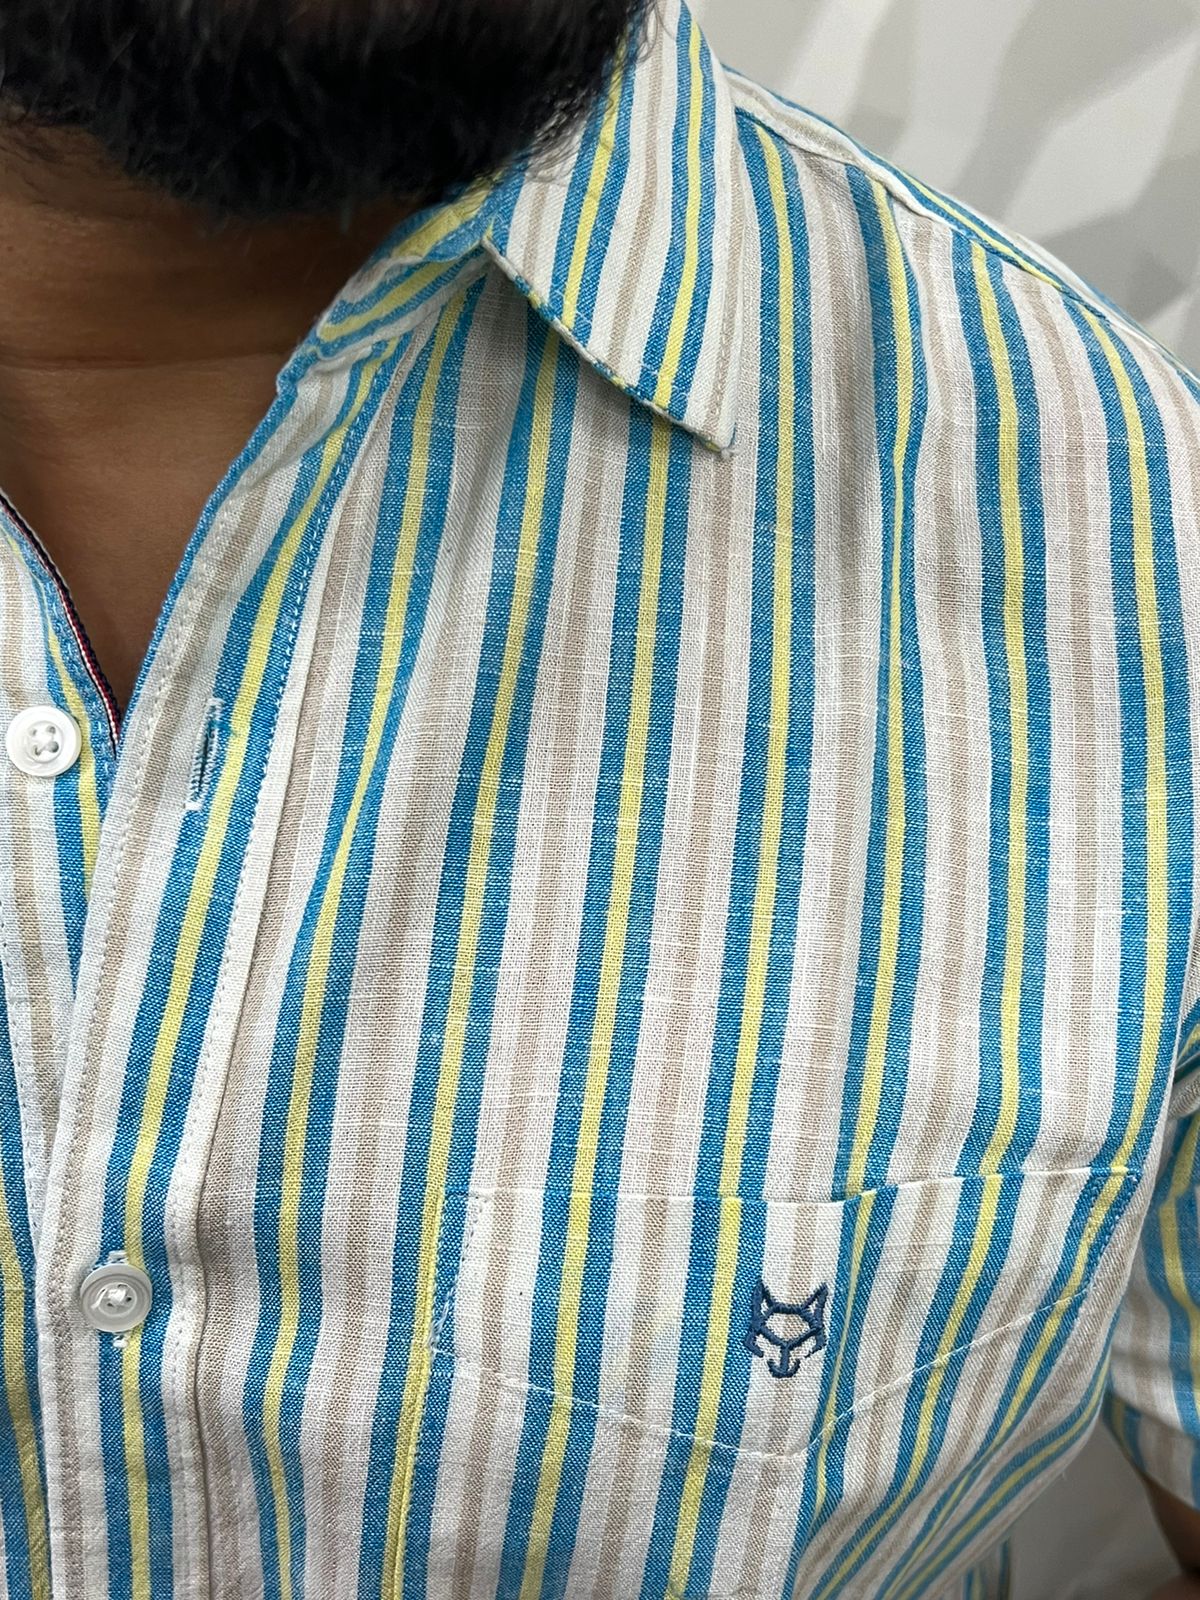 Retro stripes half shirt